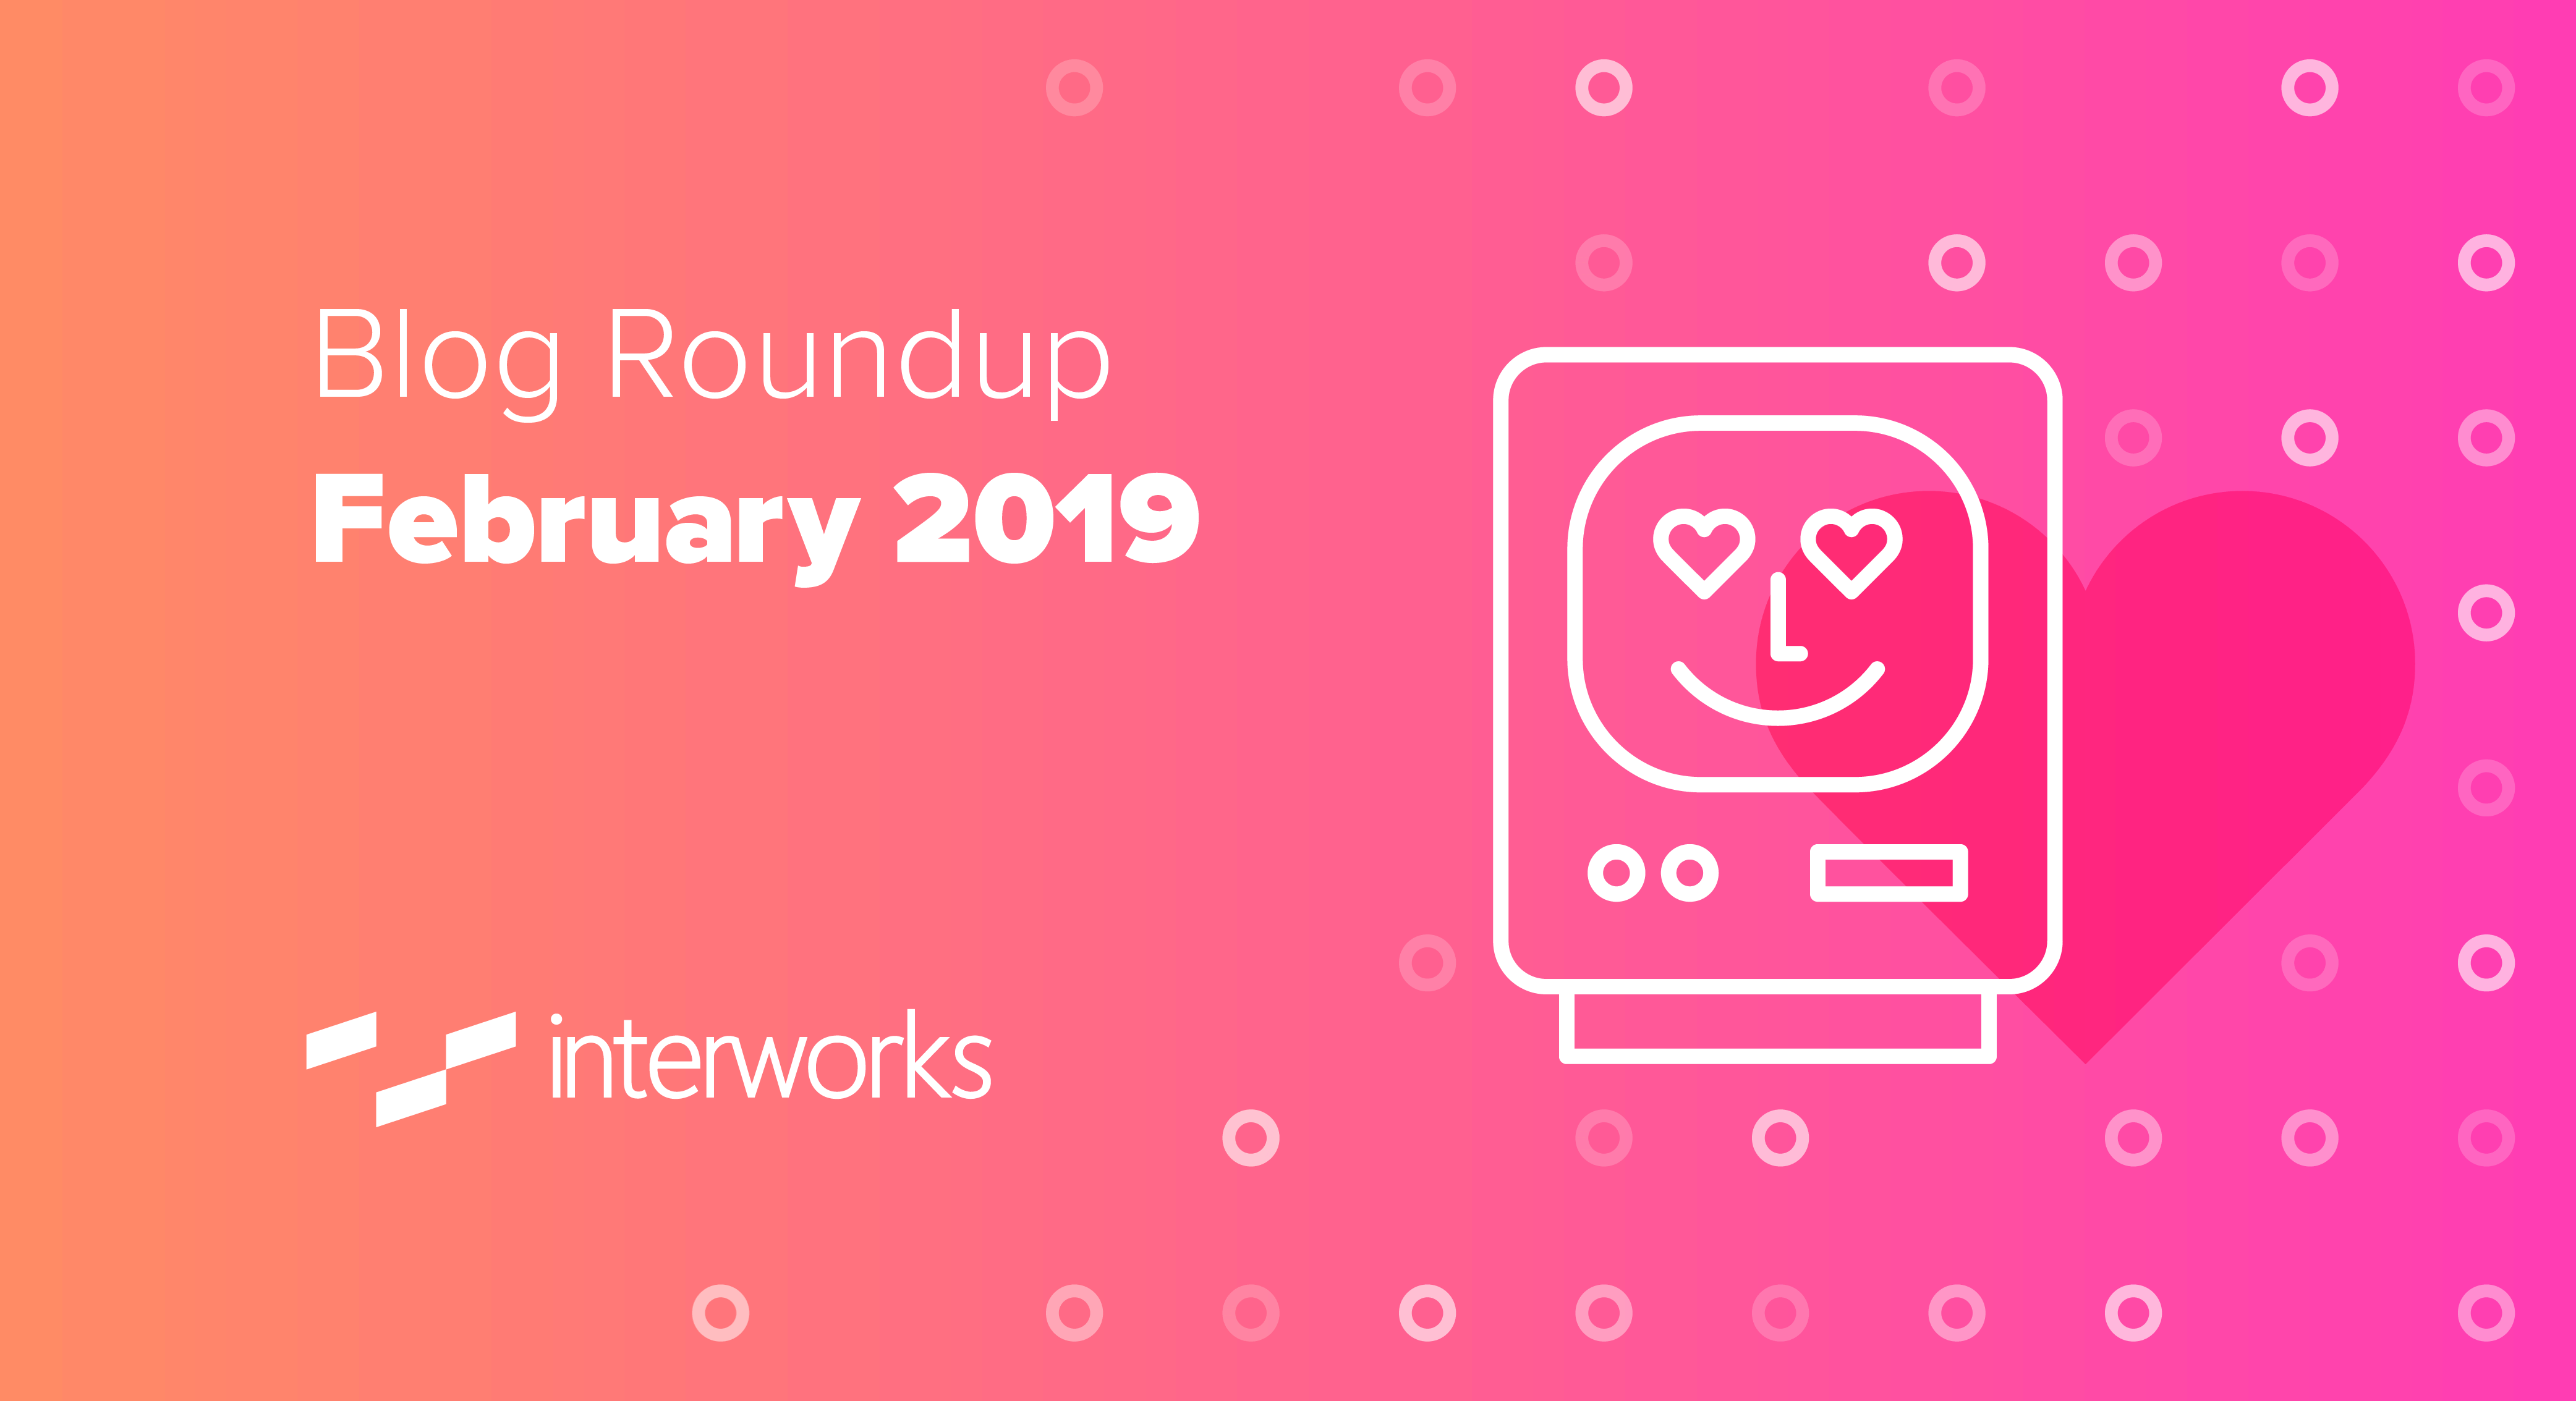 February blog roundup 2019